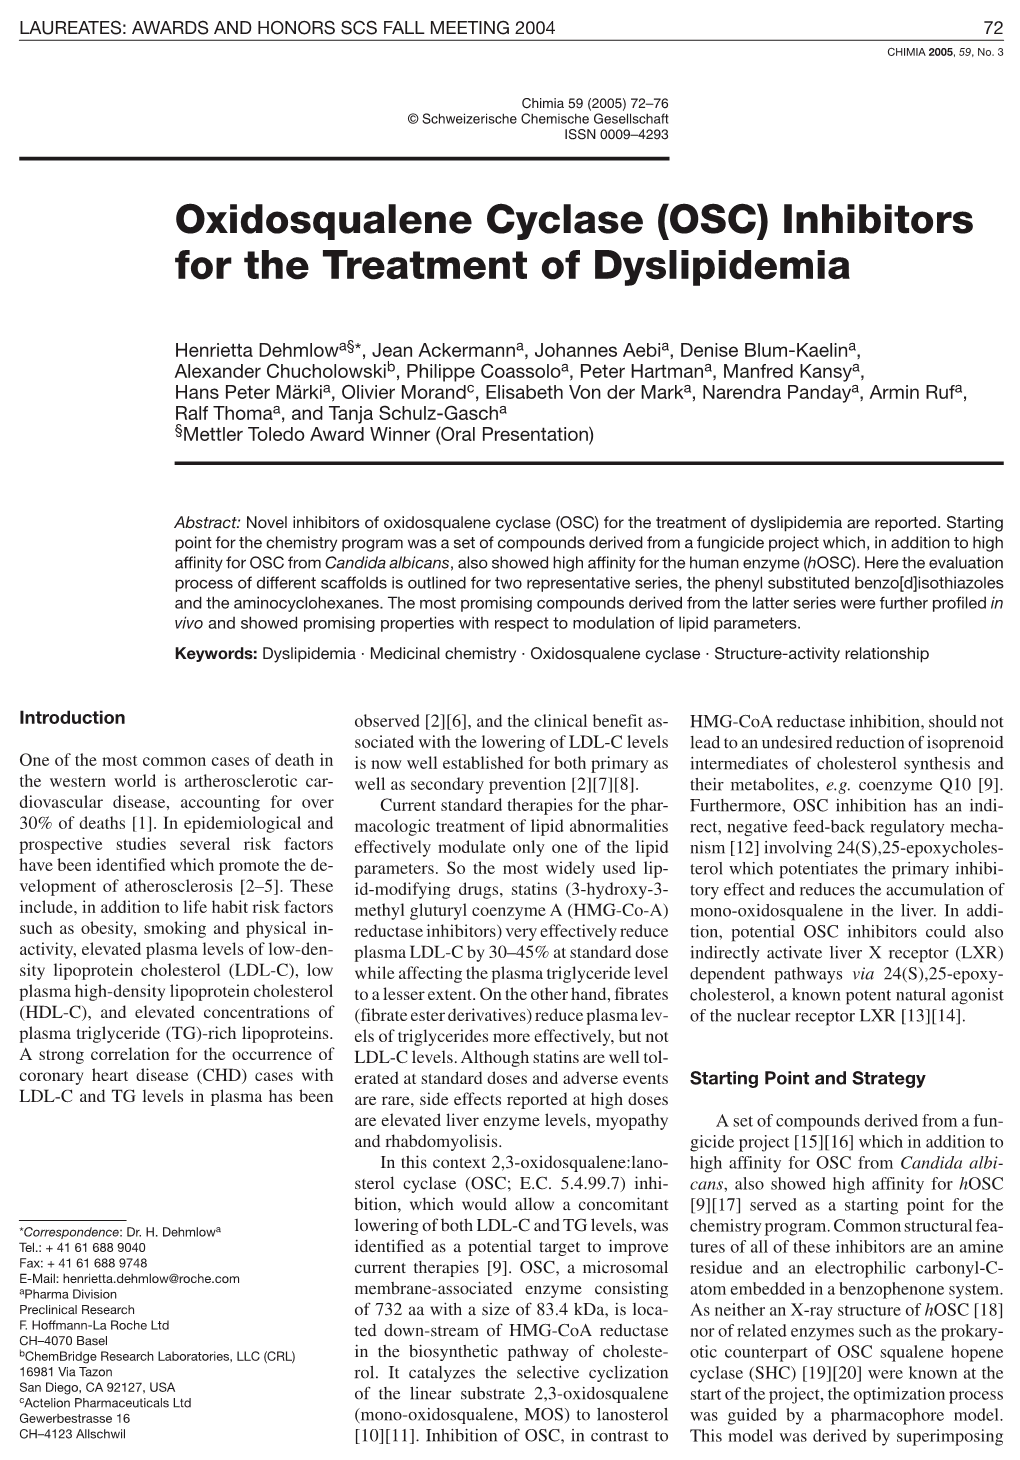 Oxidosqualene Cyclase (OSC) Inhibitors for the Treatment of Dyslipidemia